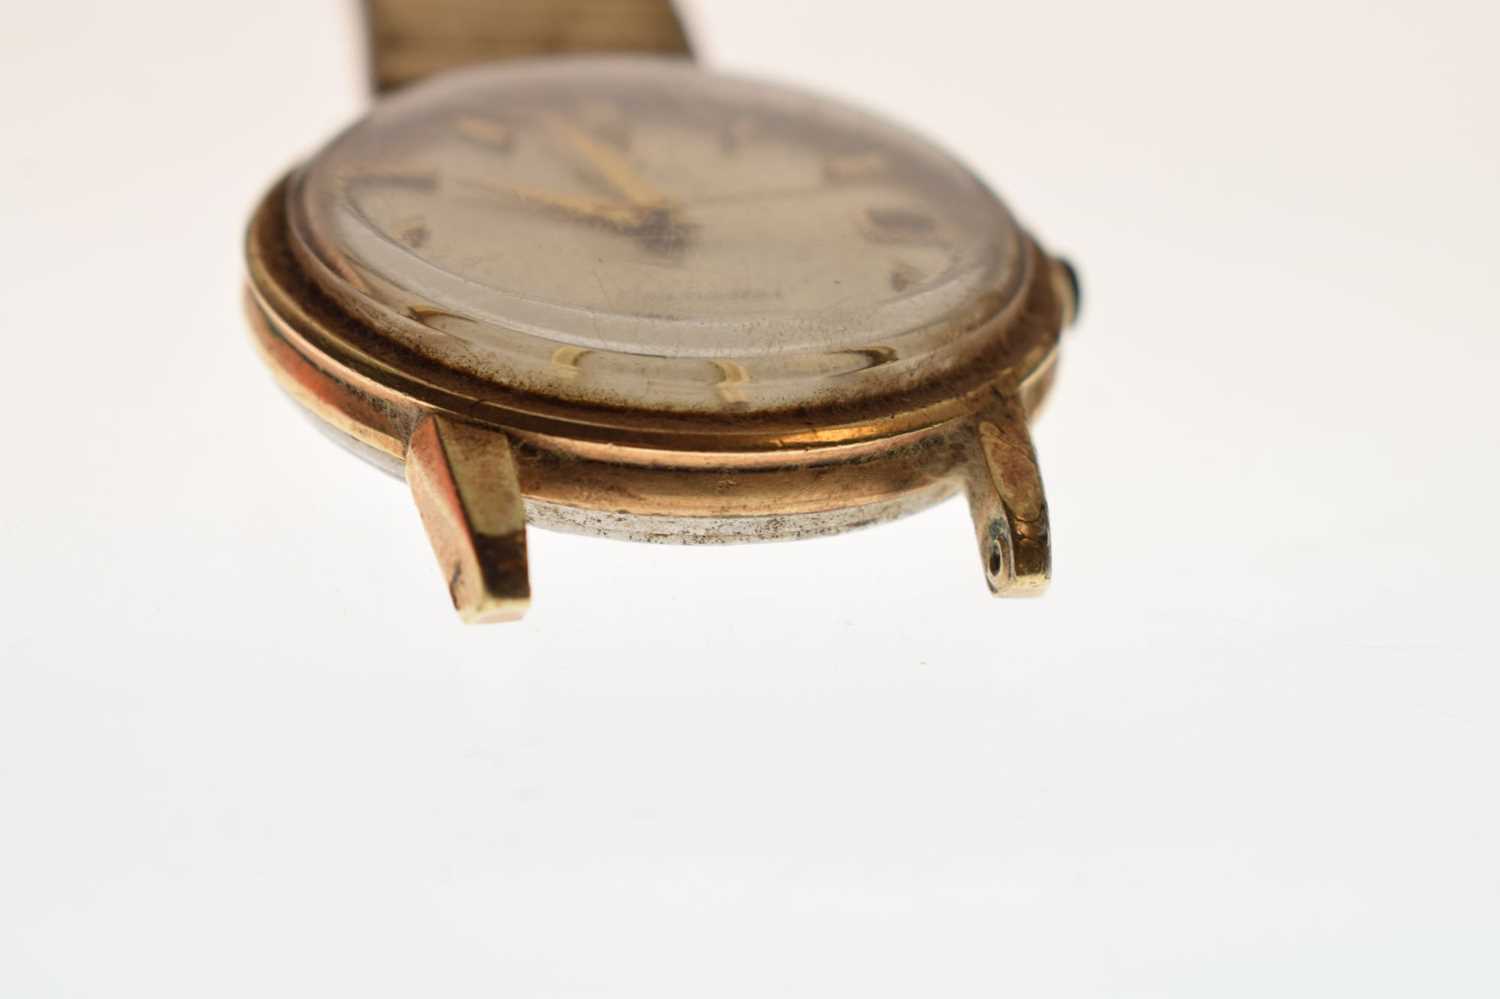 Omega - Gentleman's Seamaster gold plated bracelet watch - Image 6 of 8